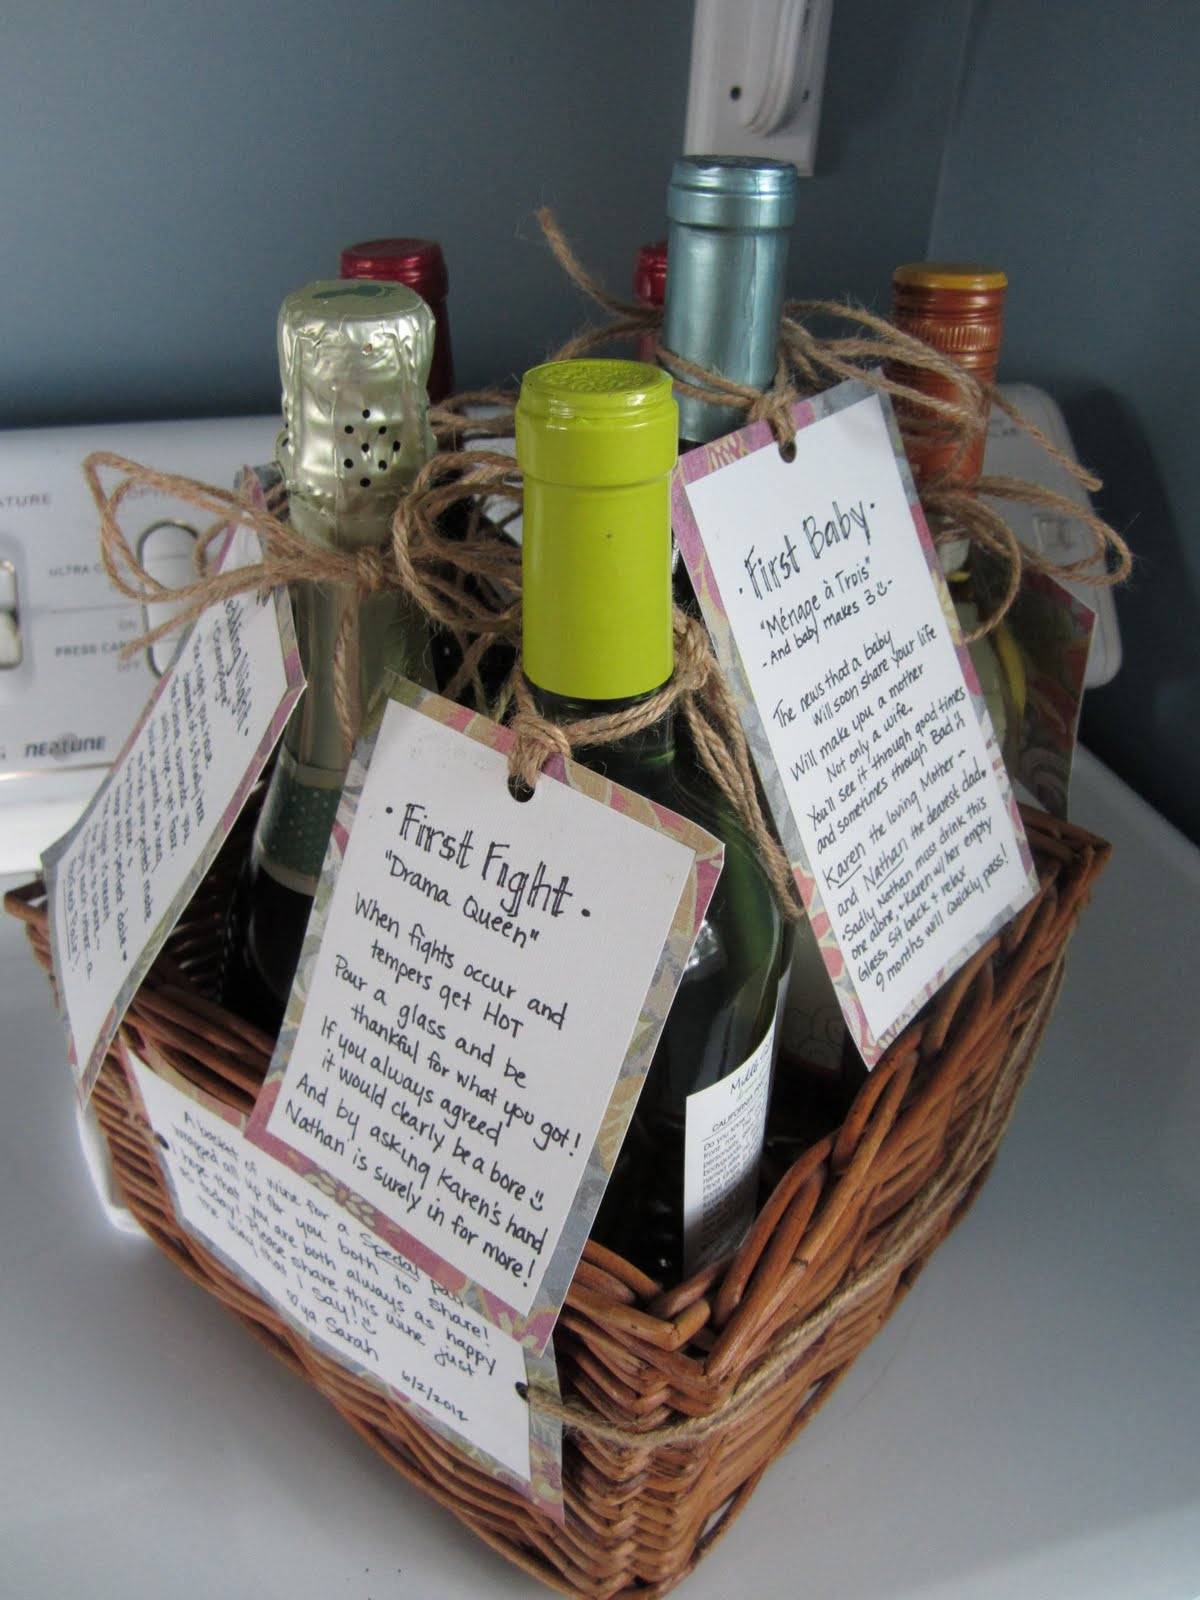 Bridal Shower Gift Basket Ideas For Guests
 Bridal Shower Gift Baskets for Guests